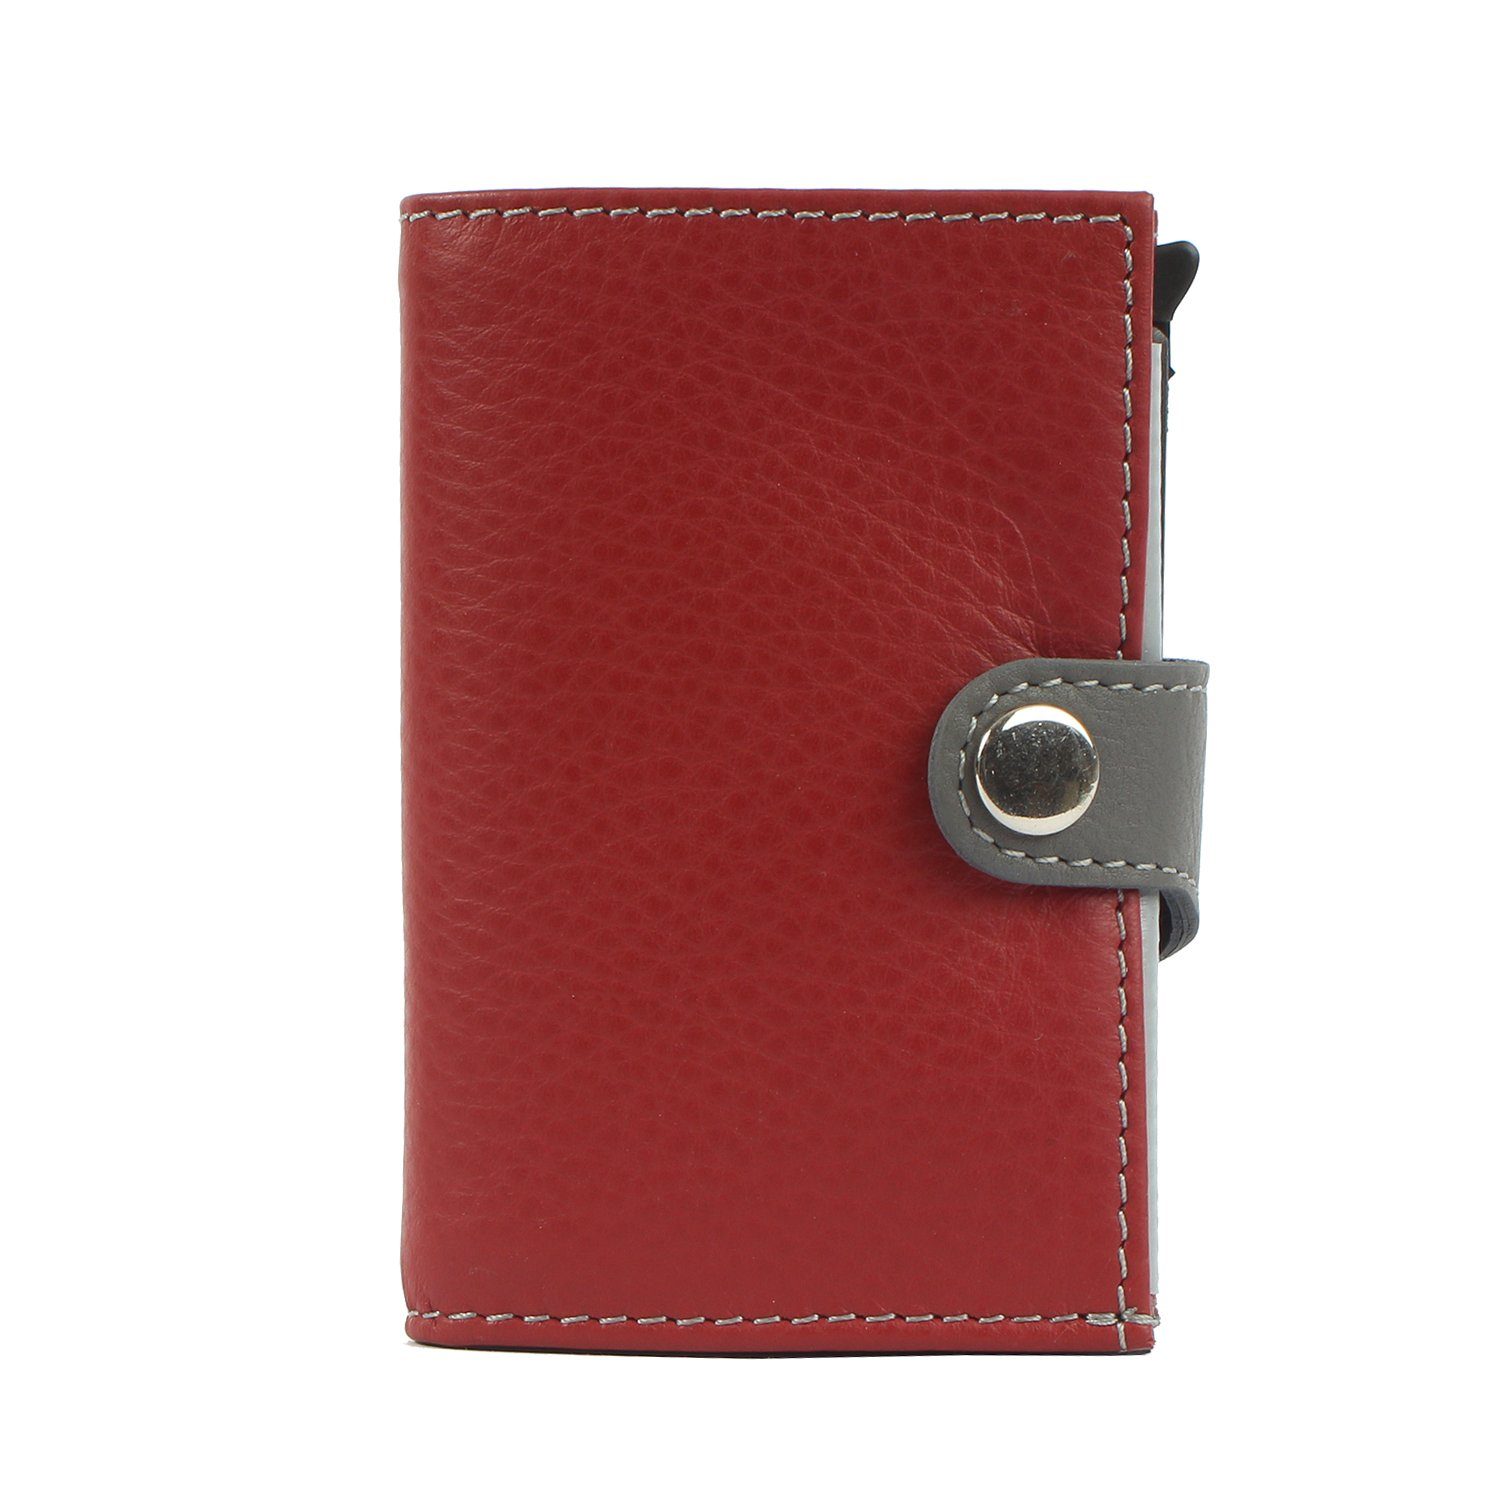 Margelisch Mini Geldbörse noonyu single leather, Kreditkartenbörse aus Upcycling Leder karminrot